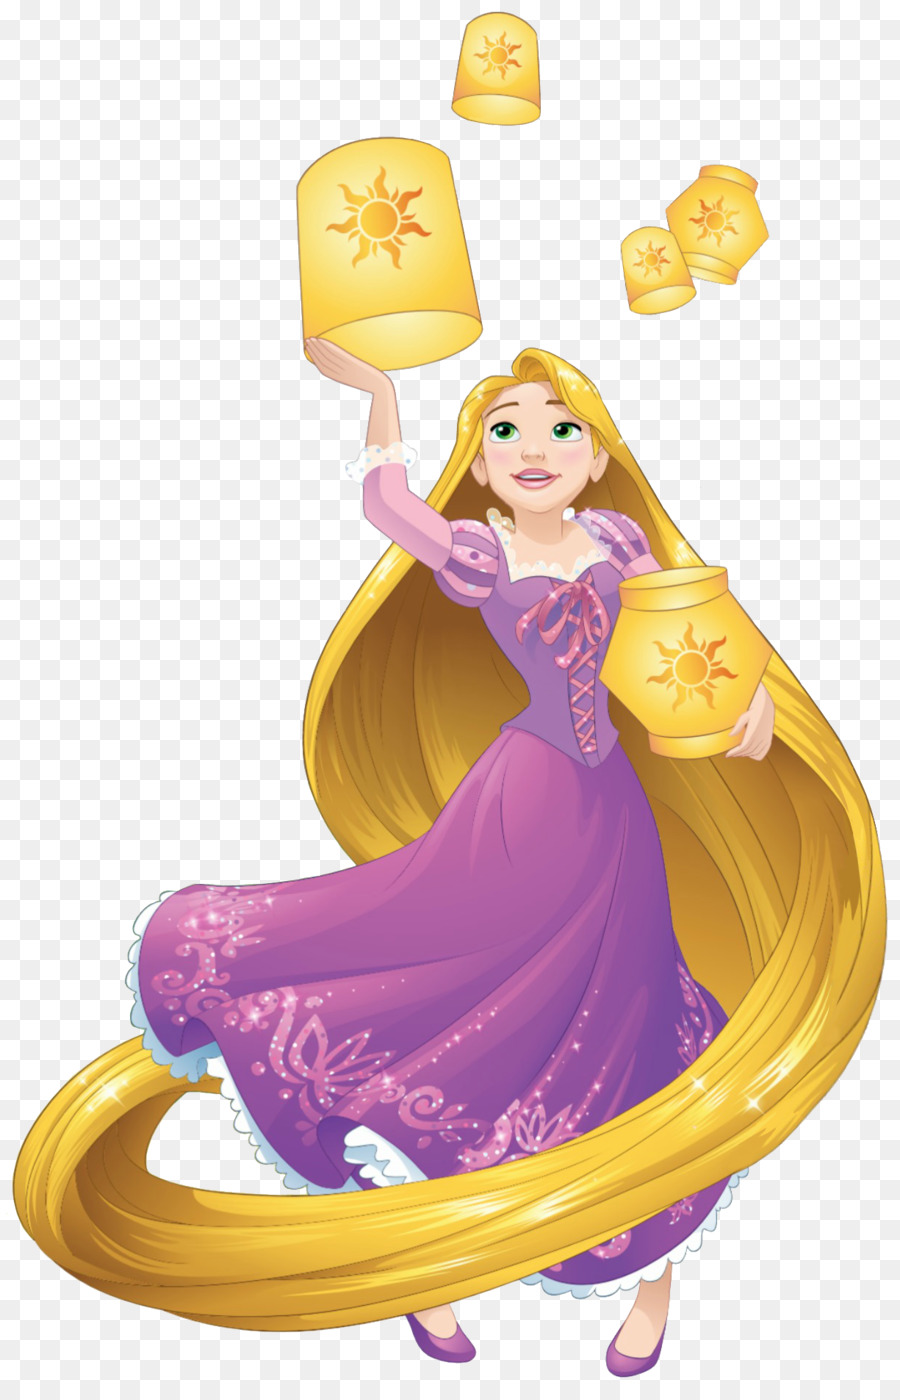 Rapunzel Wall decal The Walt Disney Company Sticker - Rapunzel With Lanterns Png png download - 1225*1889 - Free Transparent Rapunzel png Download.